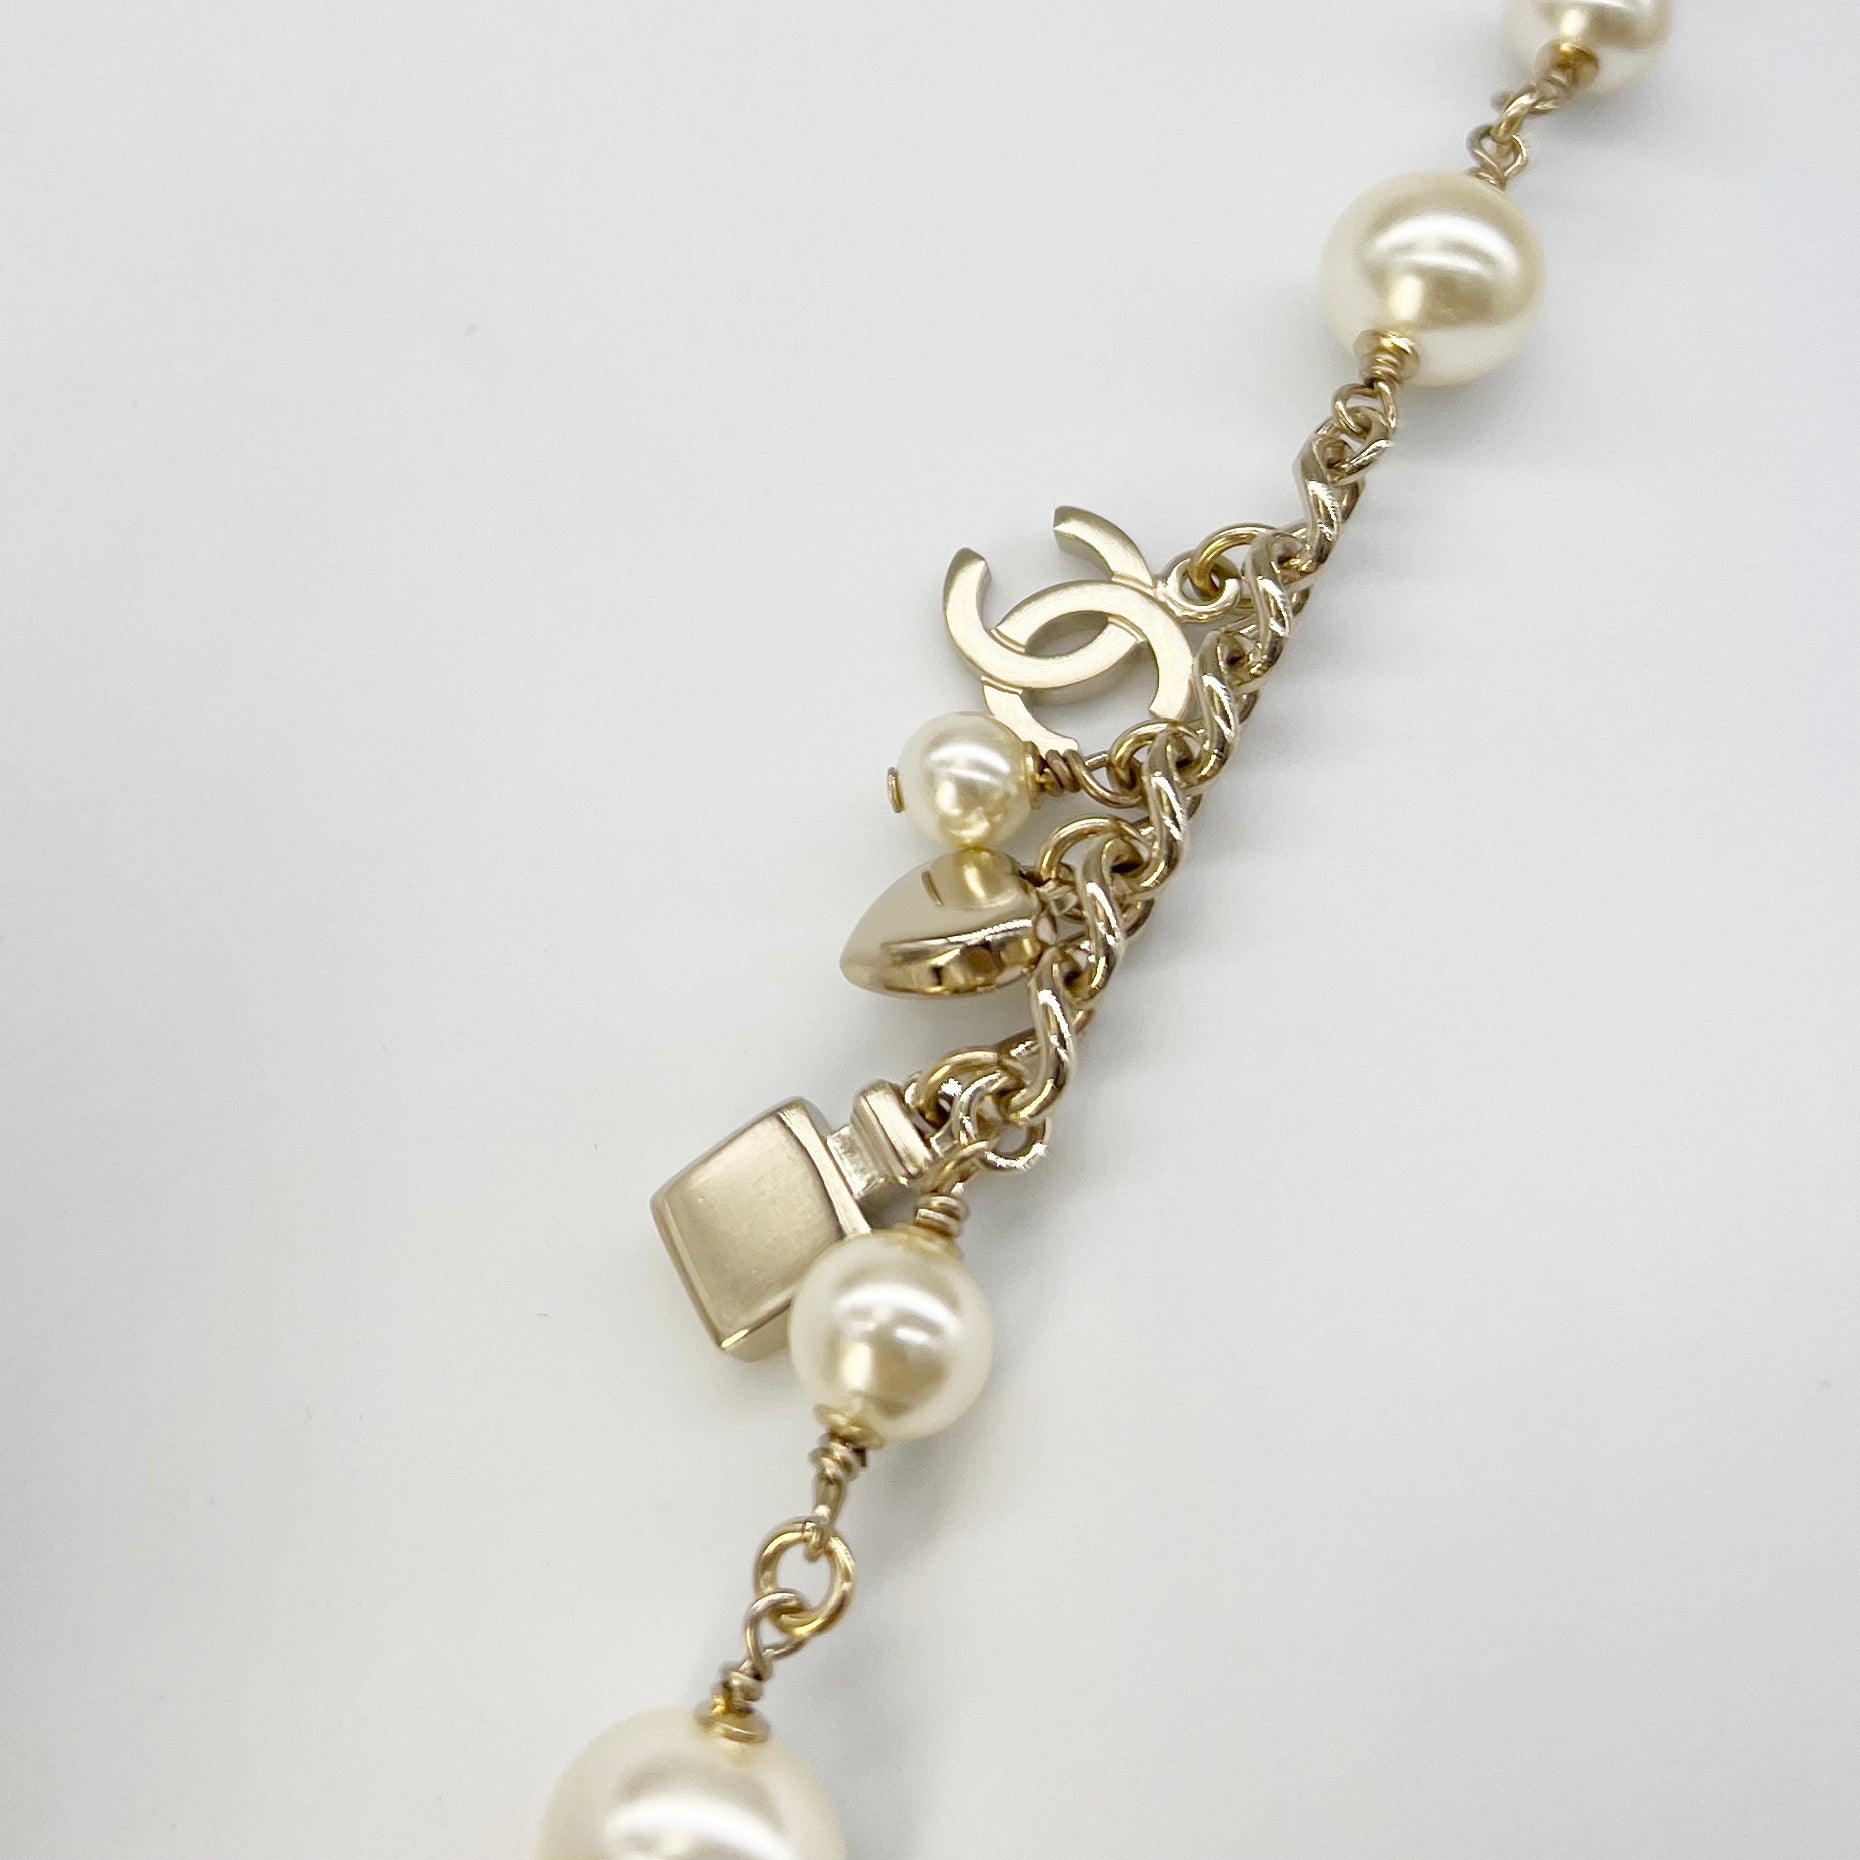 Original Repurposed DOUBLE SIDED CC Rhinestone Charm Necklace